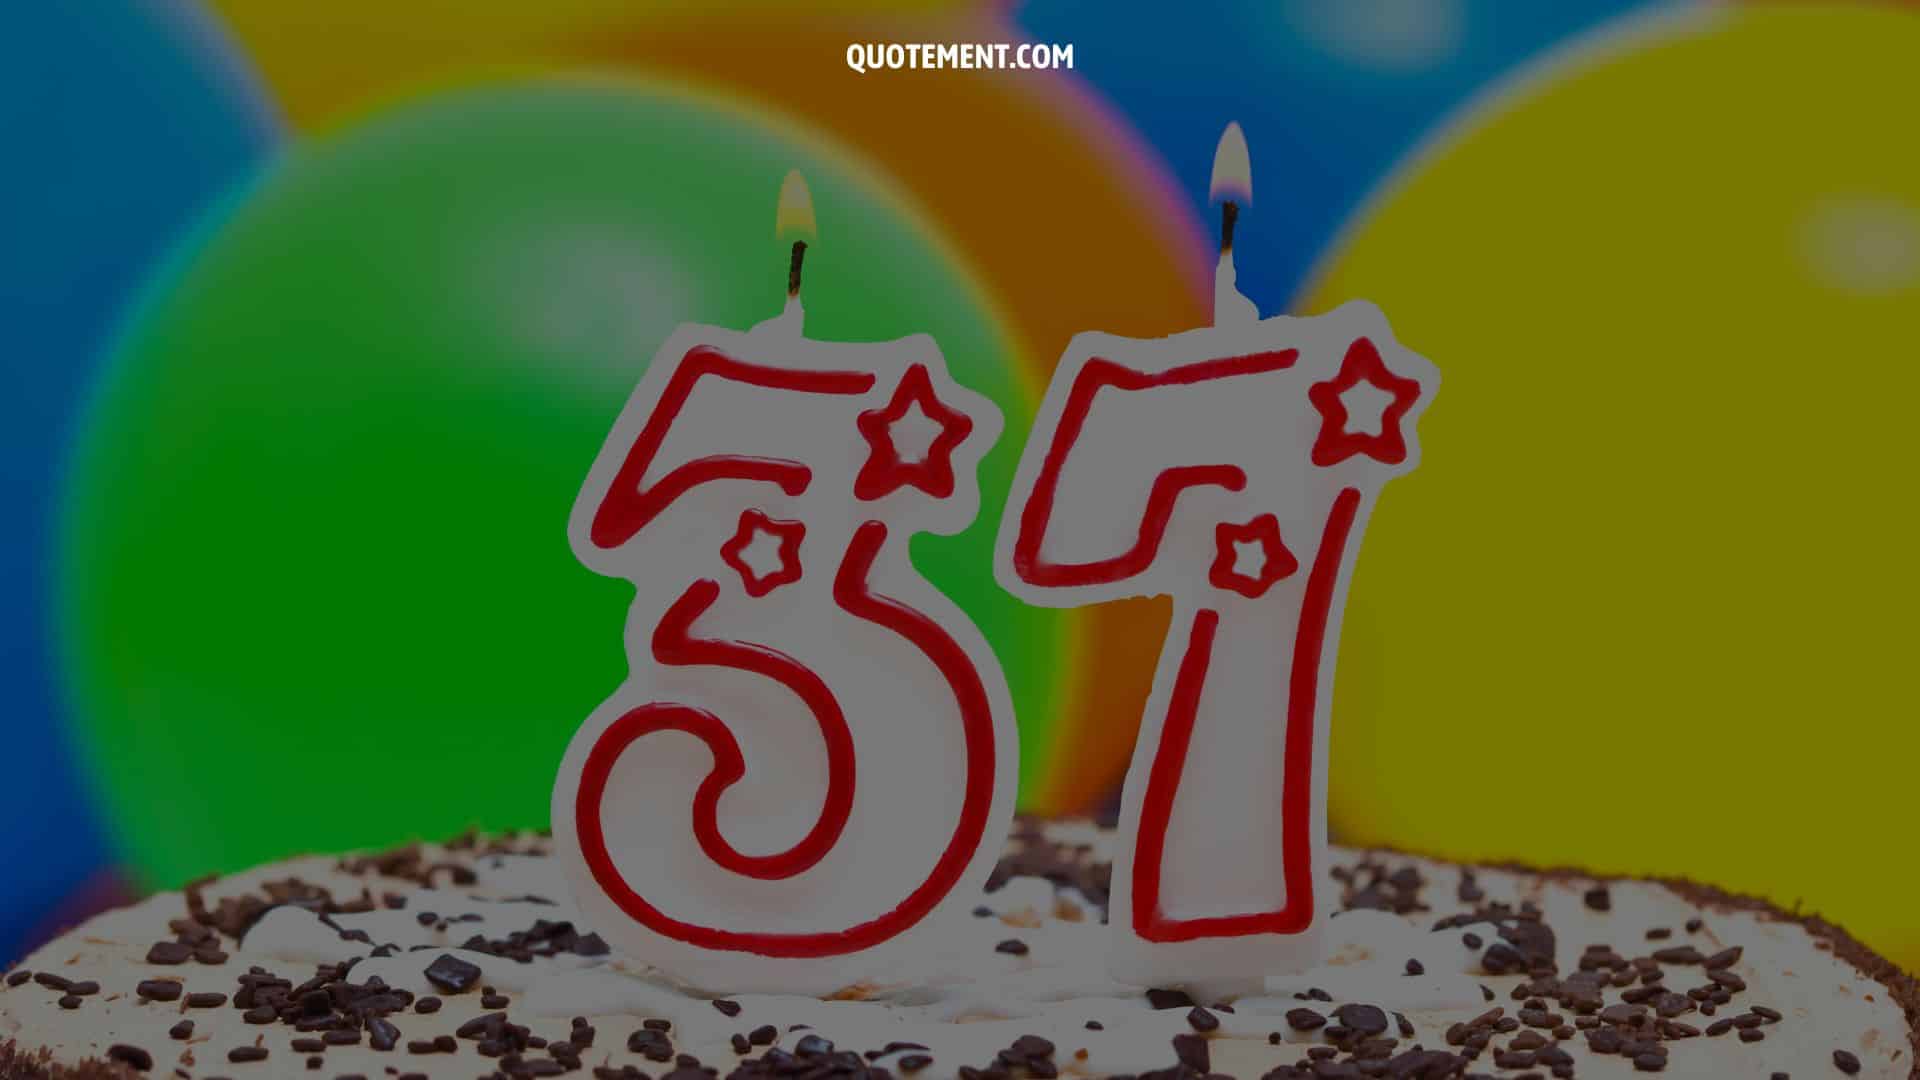 Happy 37th birthday with chocolate cream cake Vector Image